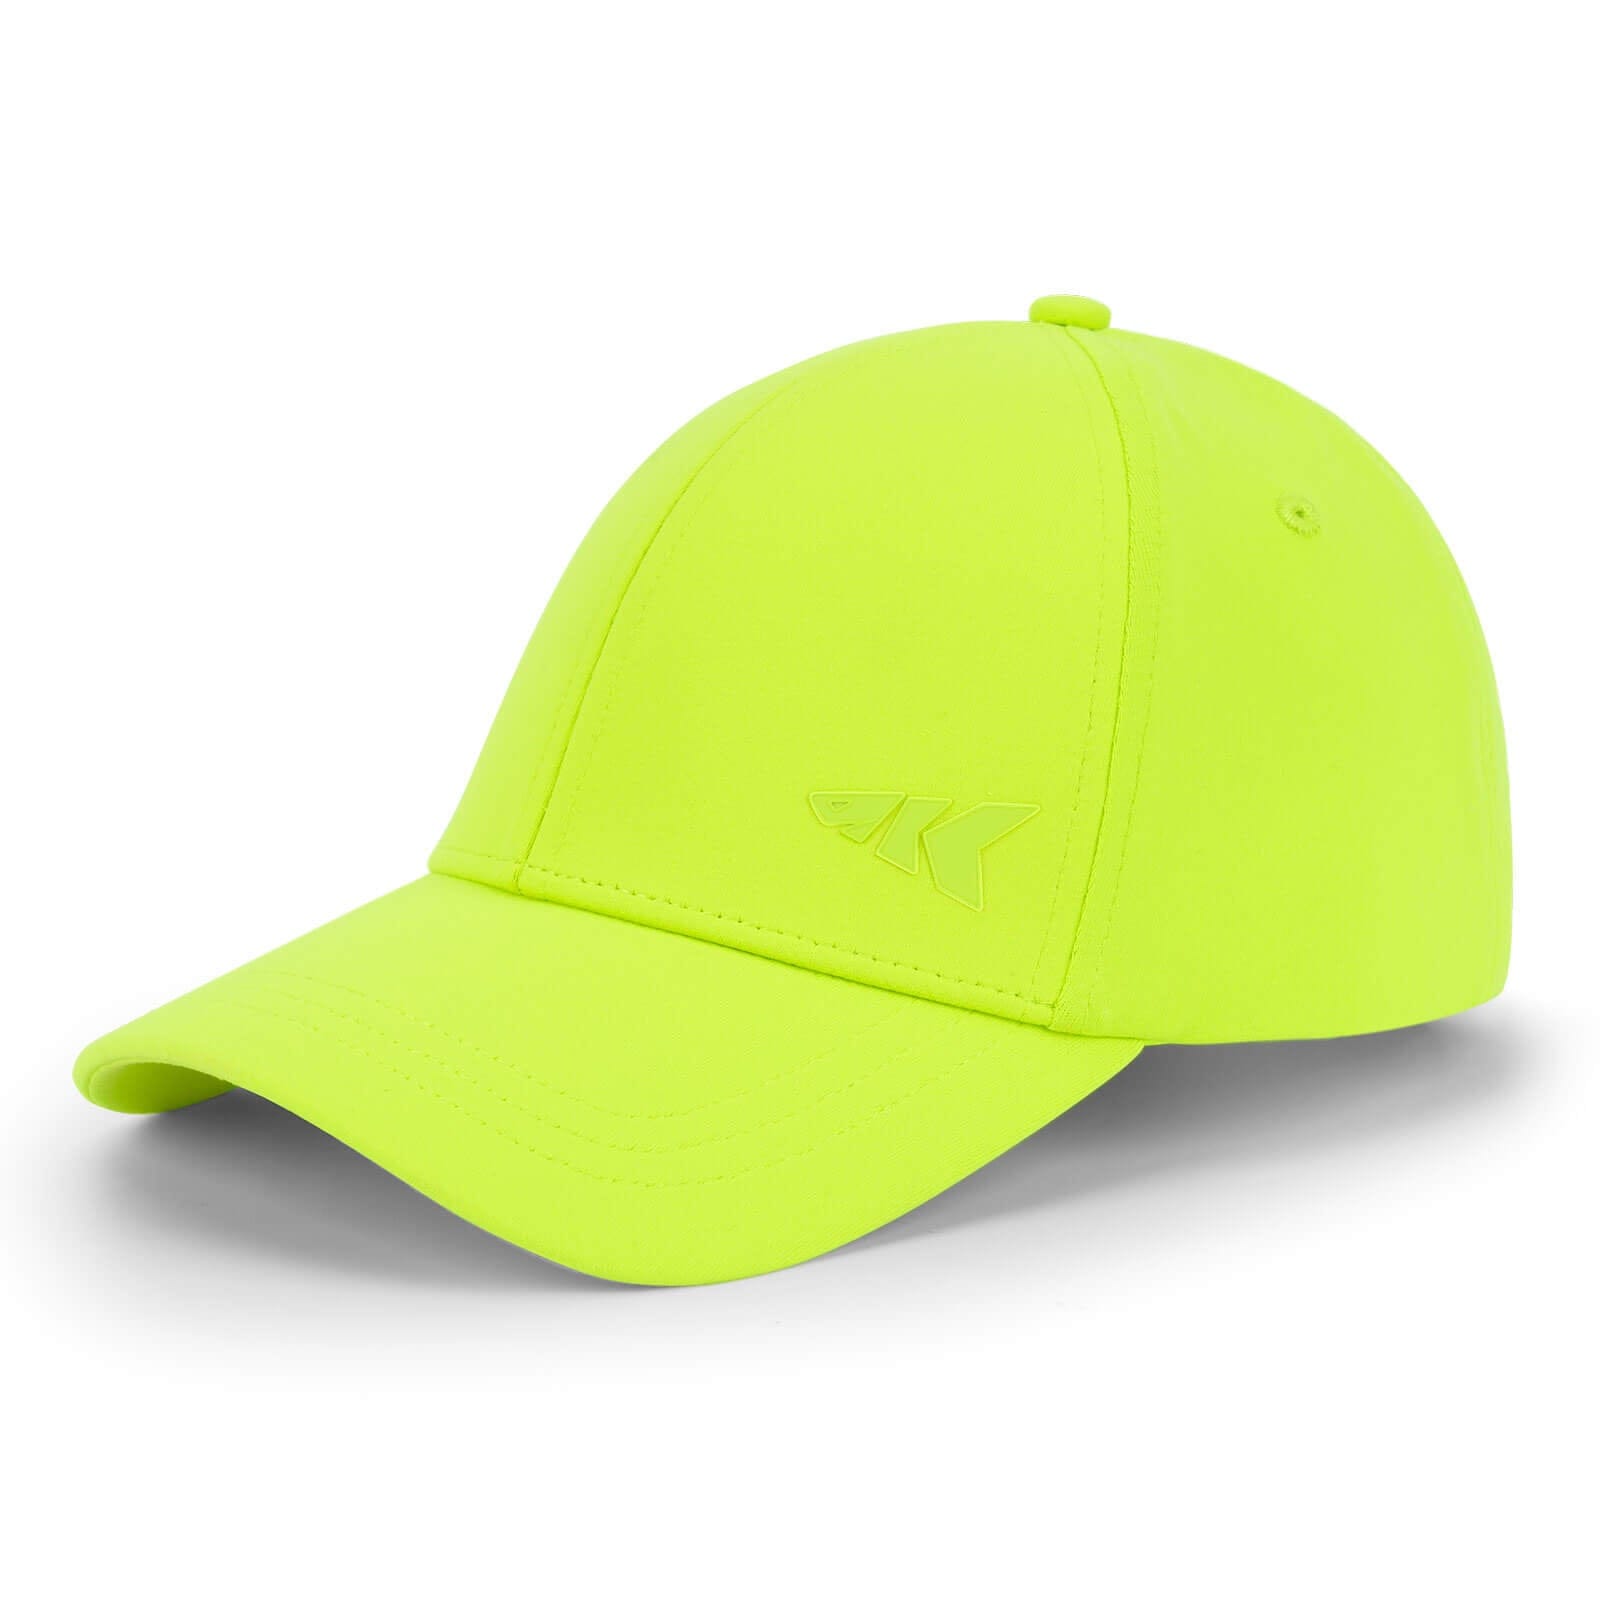 KastKing Official Caps - Adjustable / Lime Punch